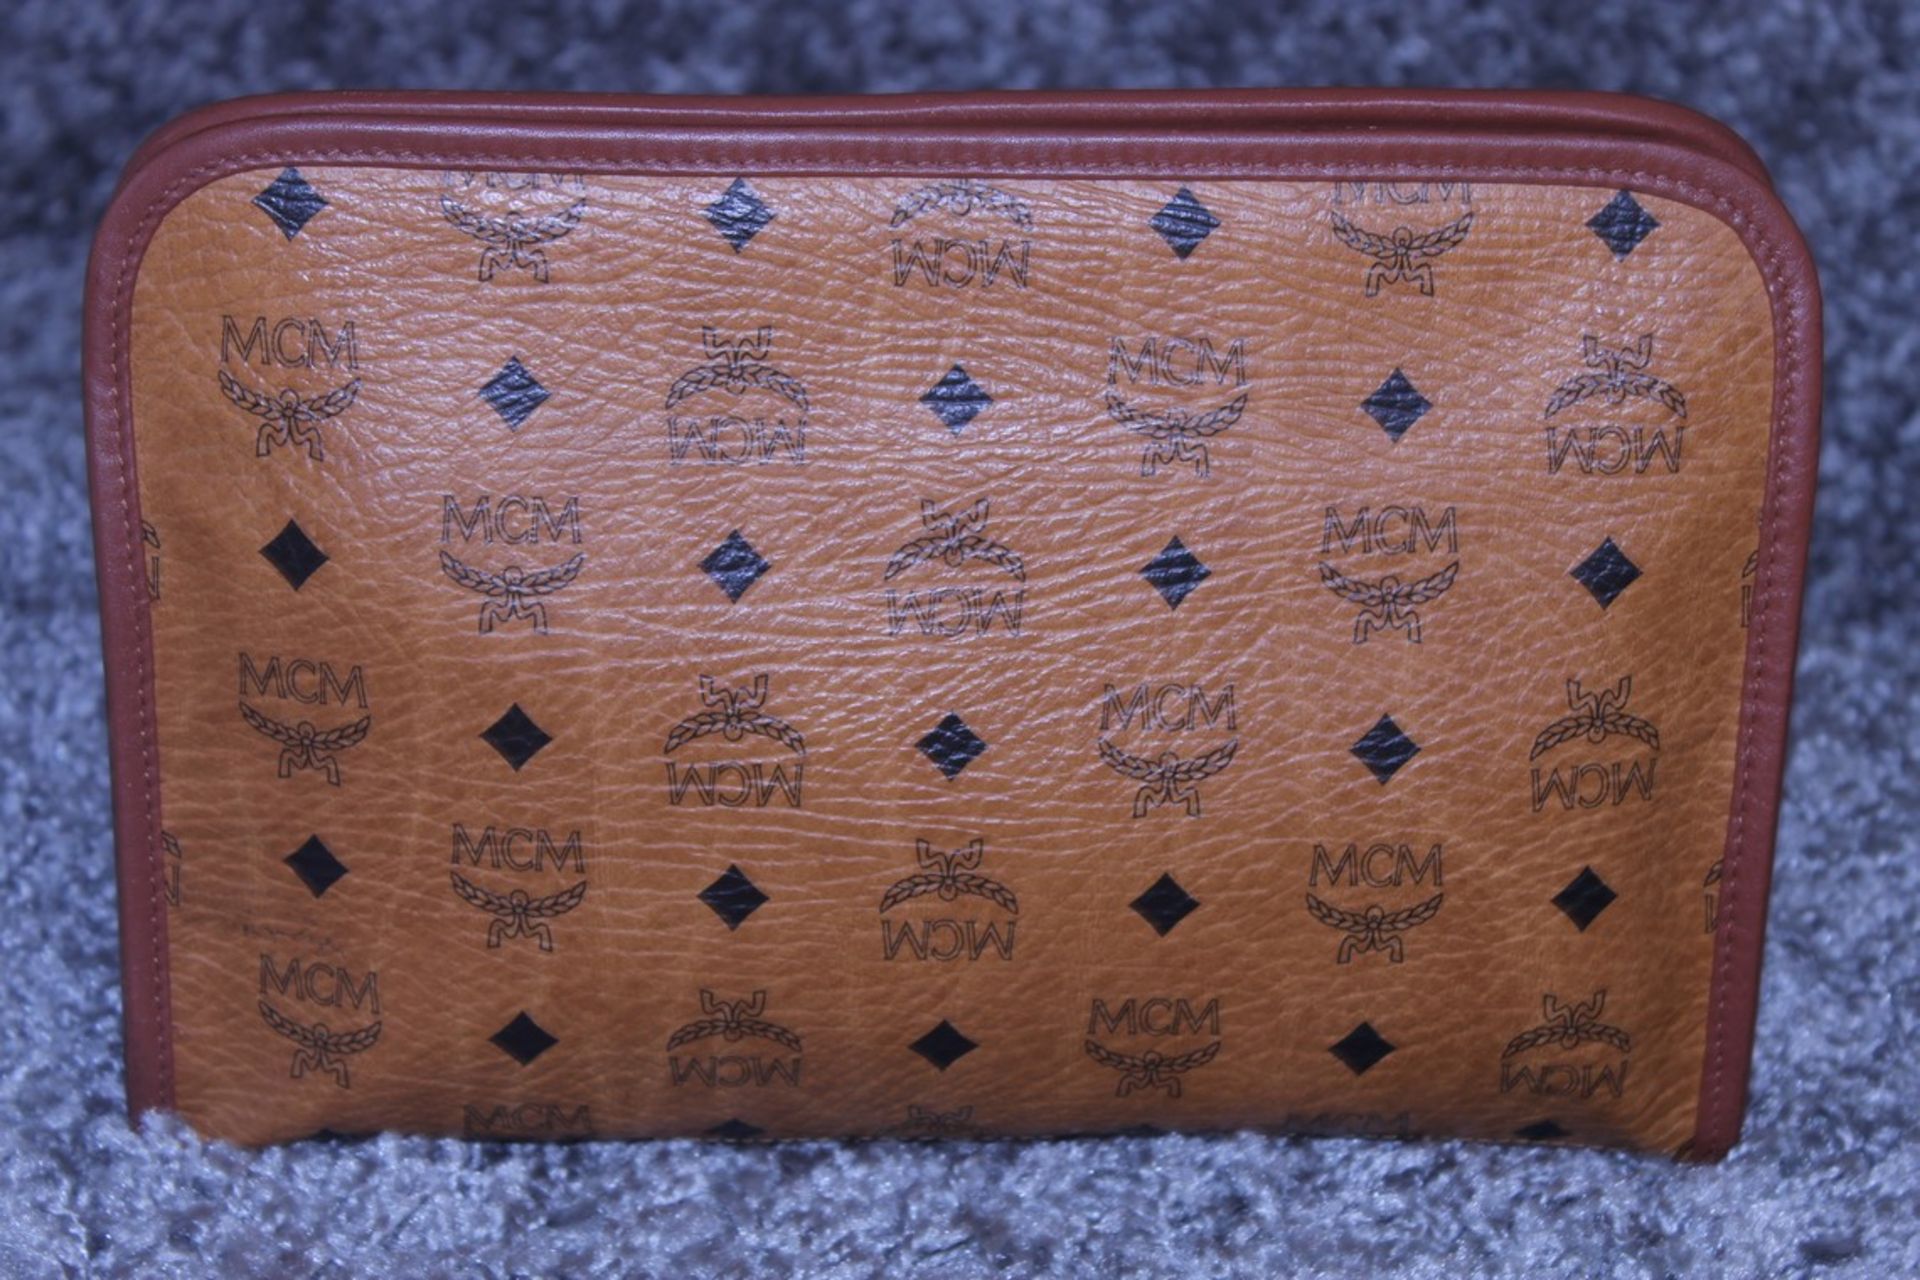 Rrp £300 MCM Calf Leather Cognac Monogramme Gold Vachetta Vintage Clutch Handbag. Production Code - Image 2 of 5